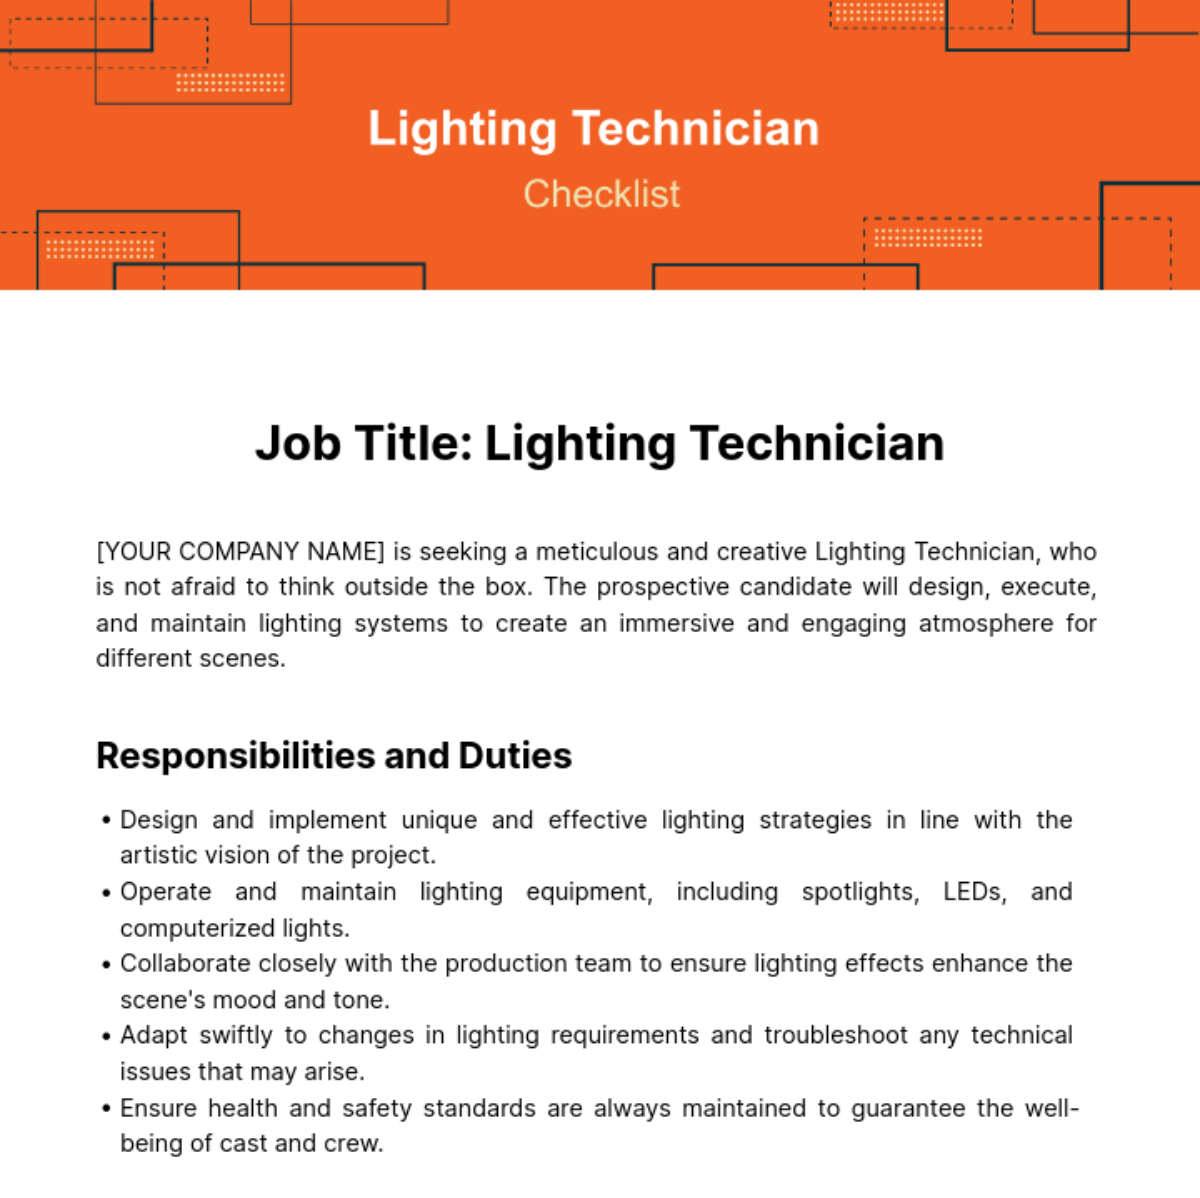 Lighting Technician Job Description Template